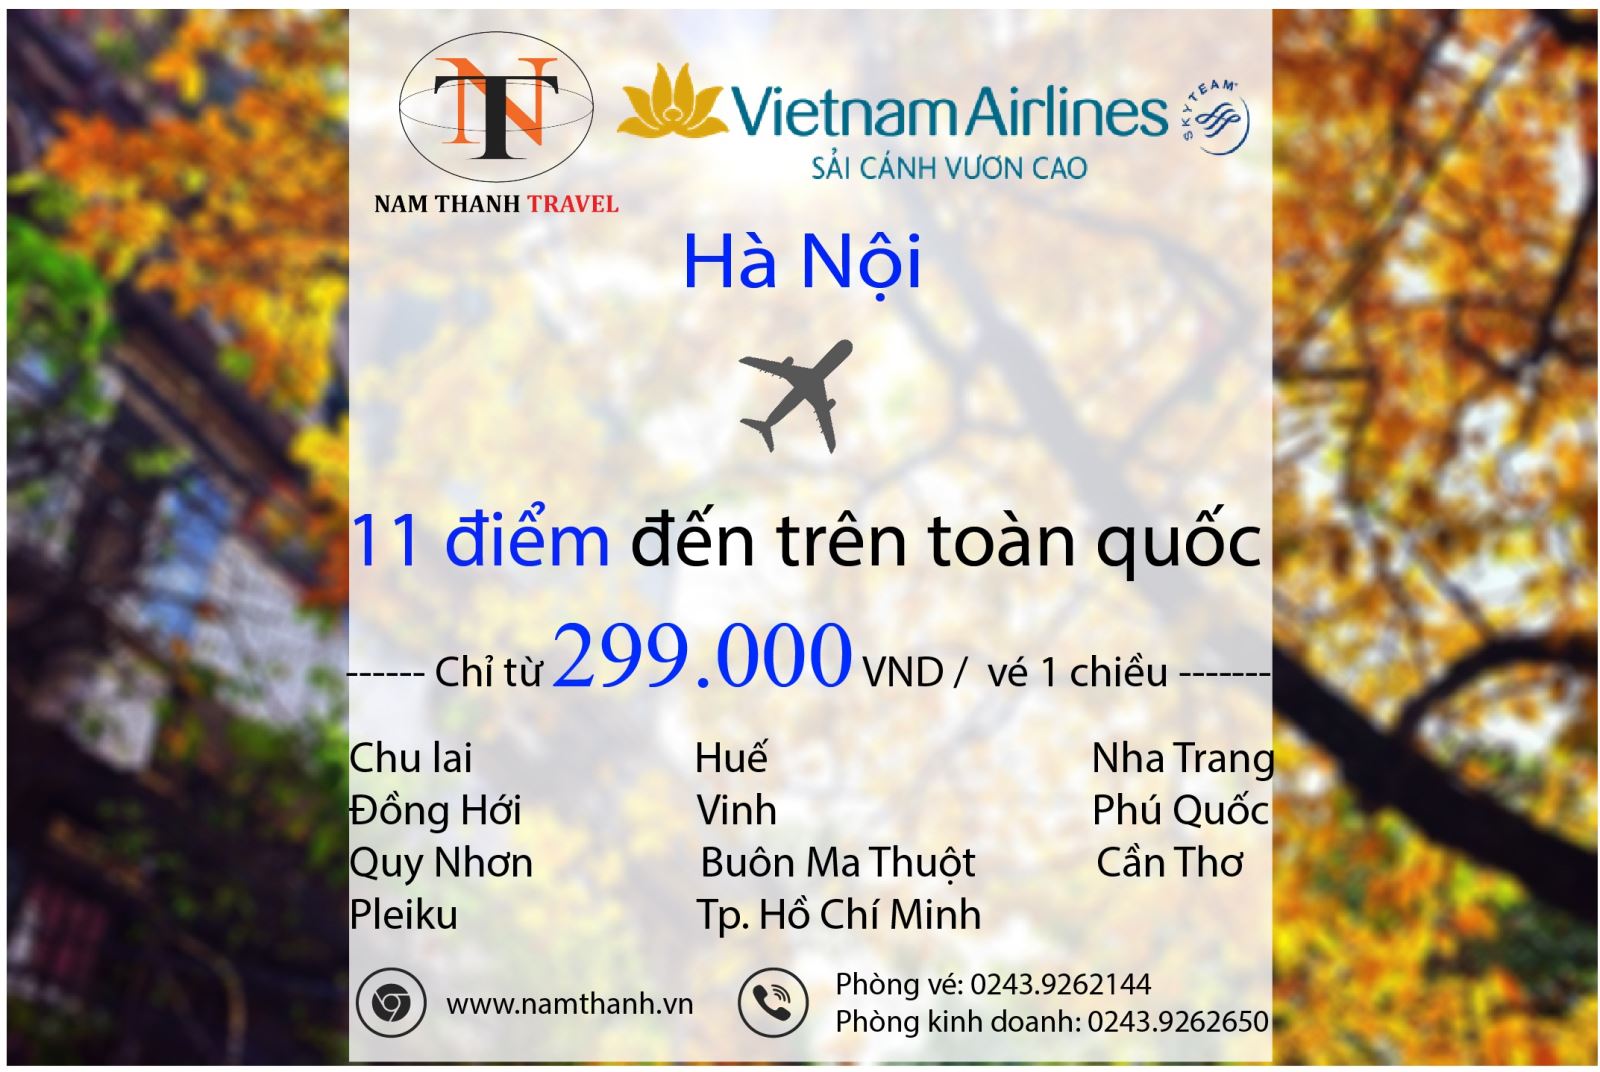 khuyen-mai-mua-thu-vang-cua-vietnam-airlines-1.jpg